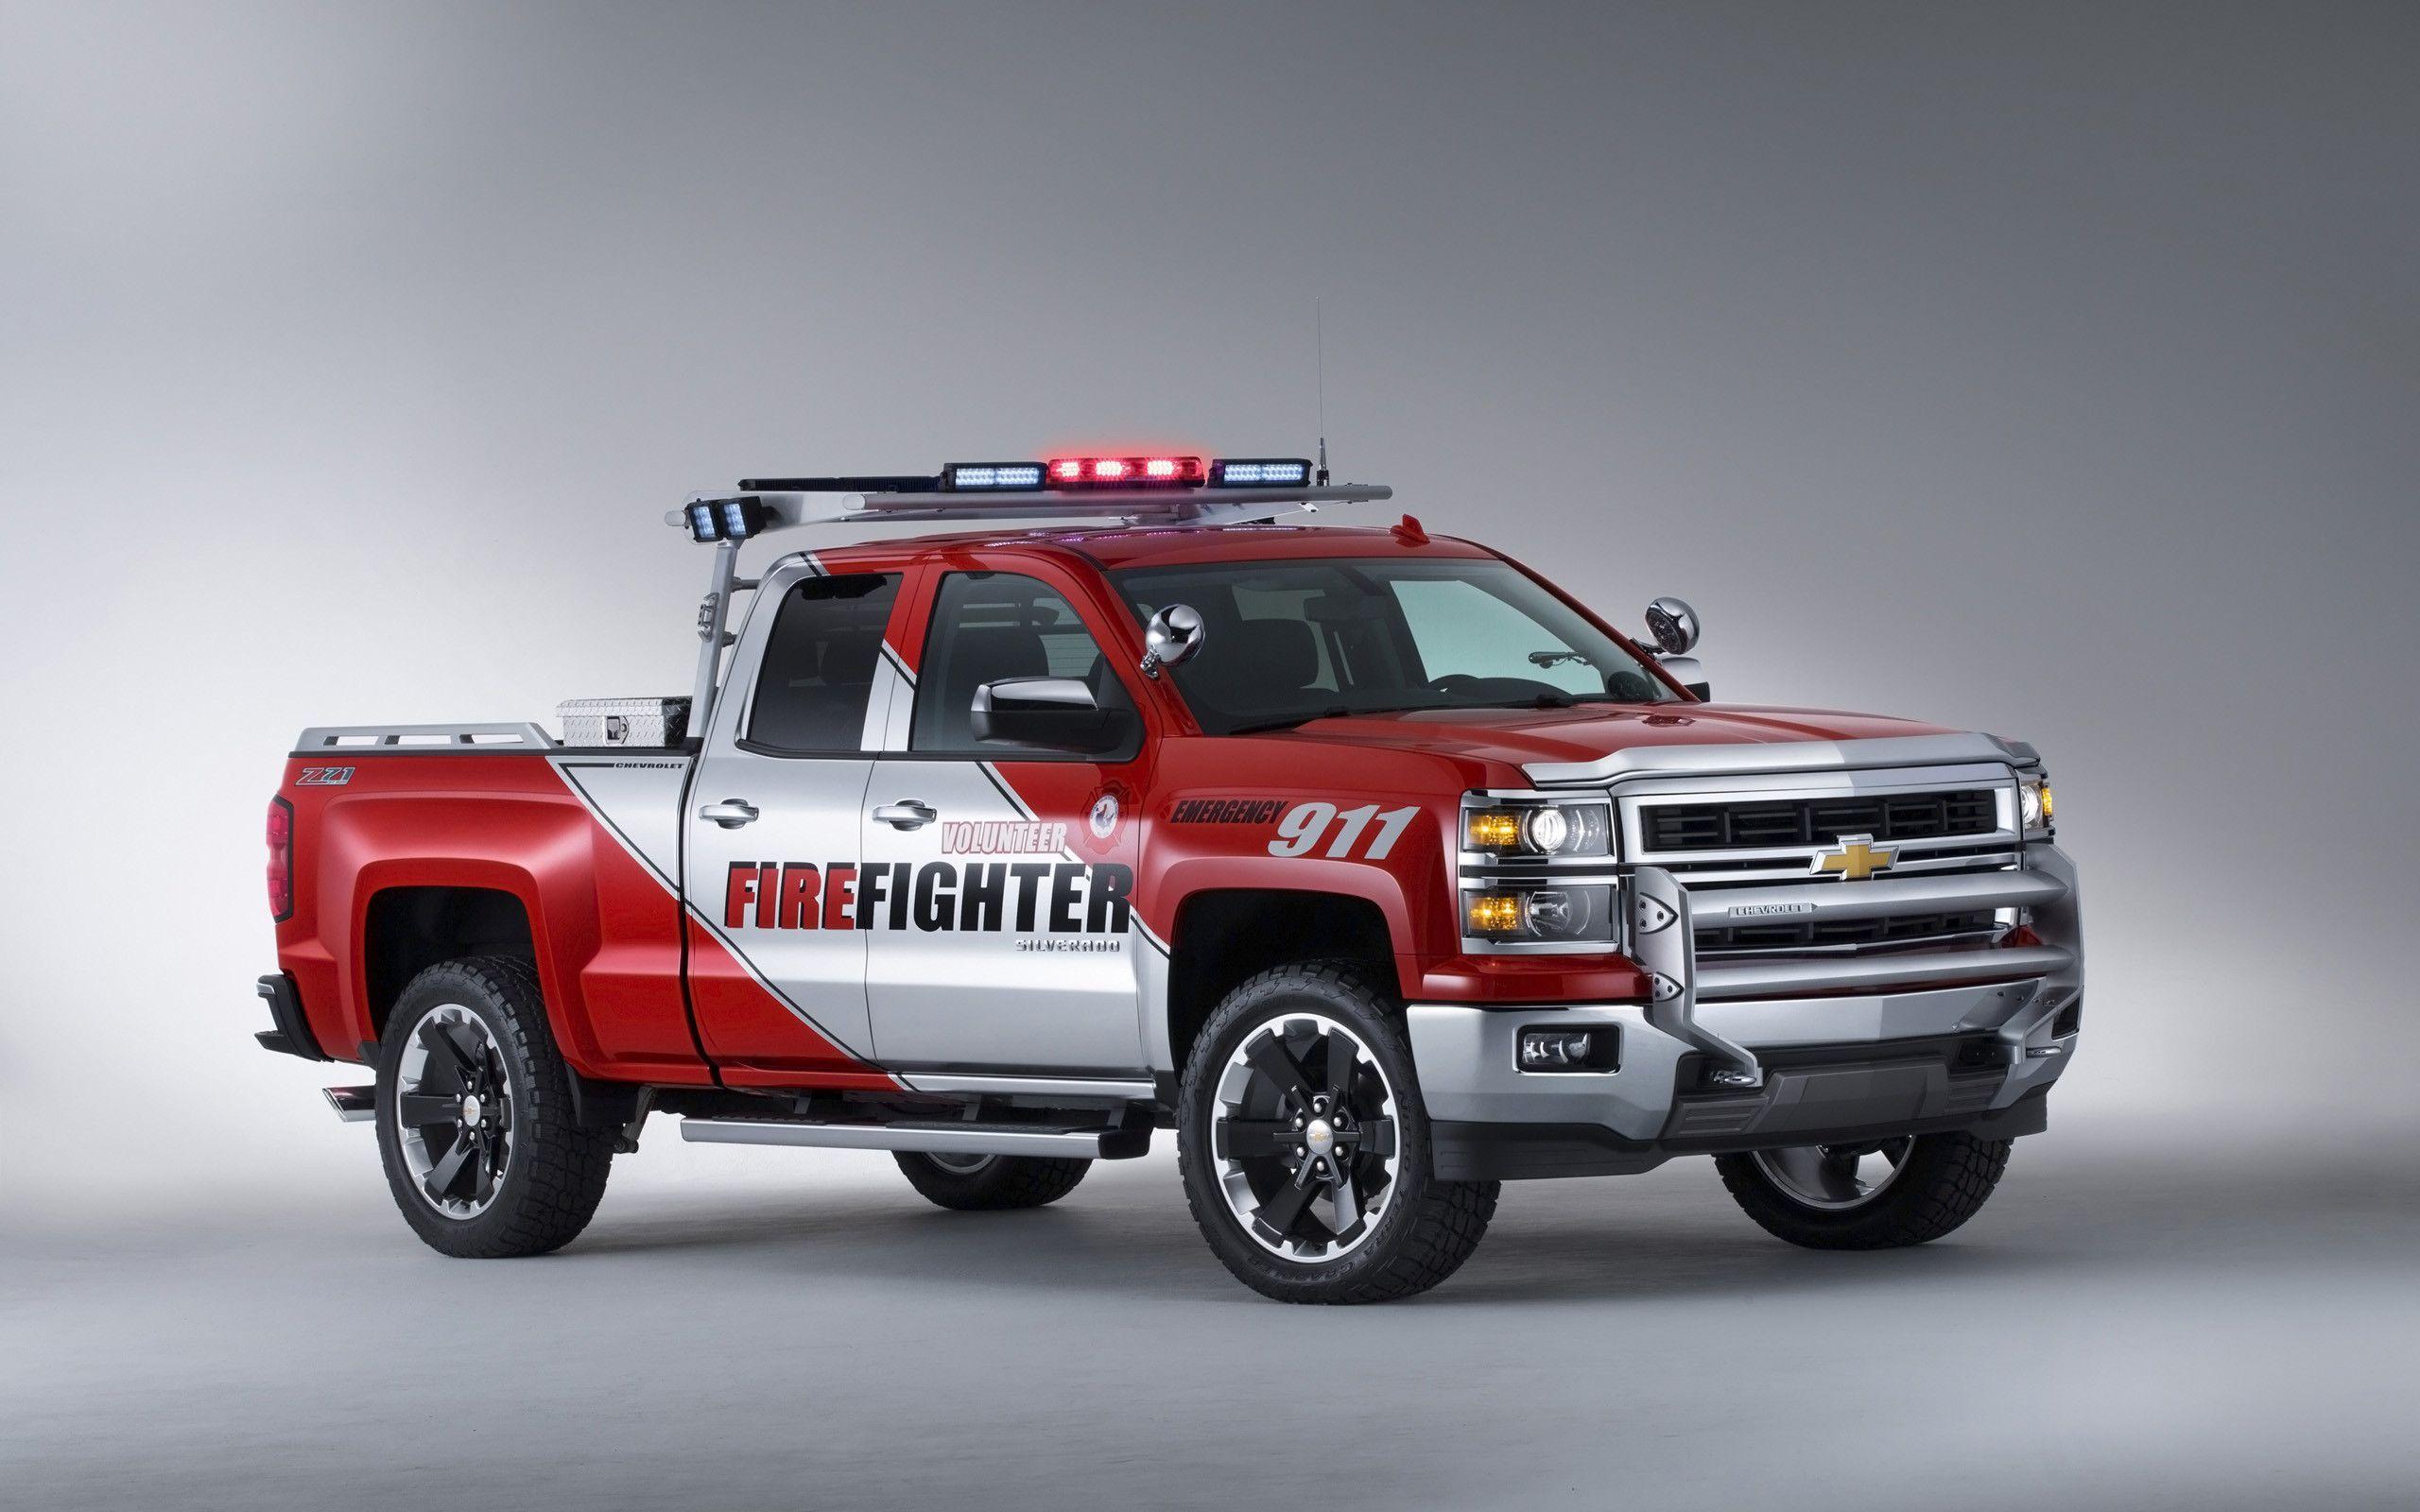 Chevrolet Silverado Volunteer Firefighters Concept firetruck